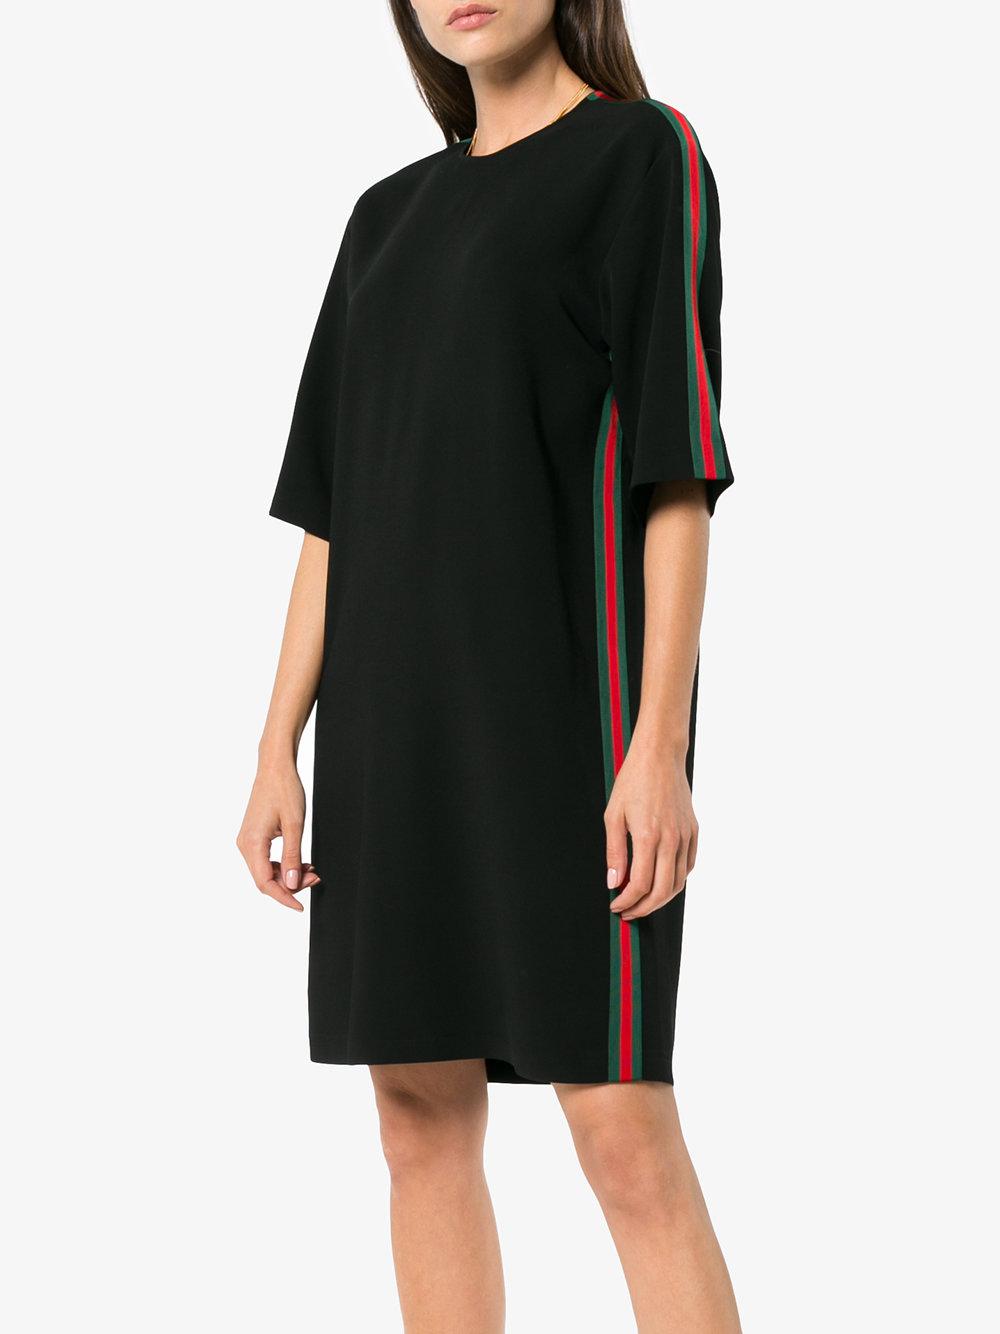 Gucci Oversized Web Stripe Cotton T Shirt Dress in Black - Lyst